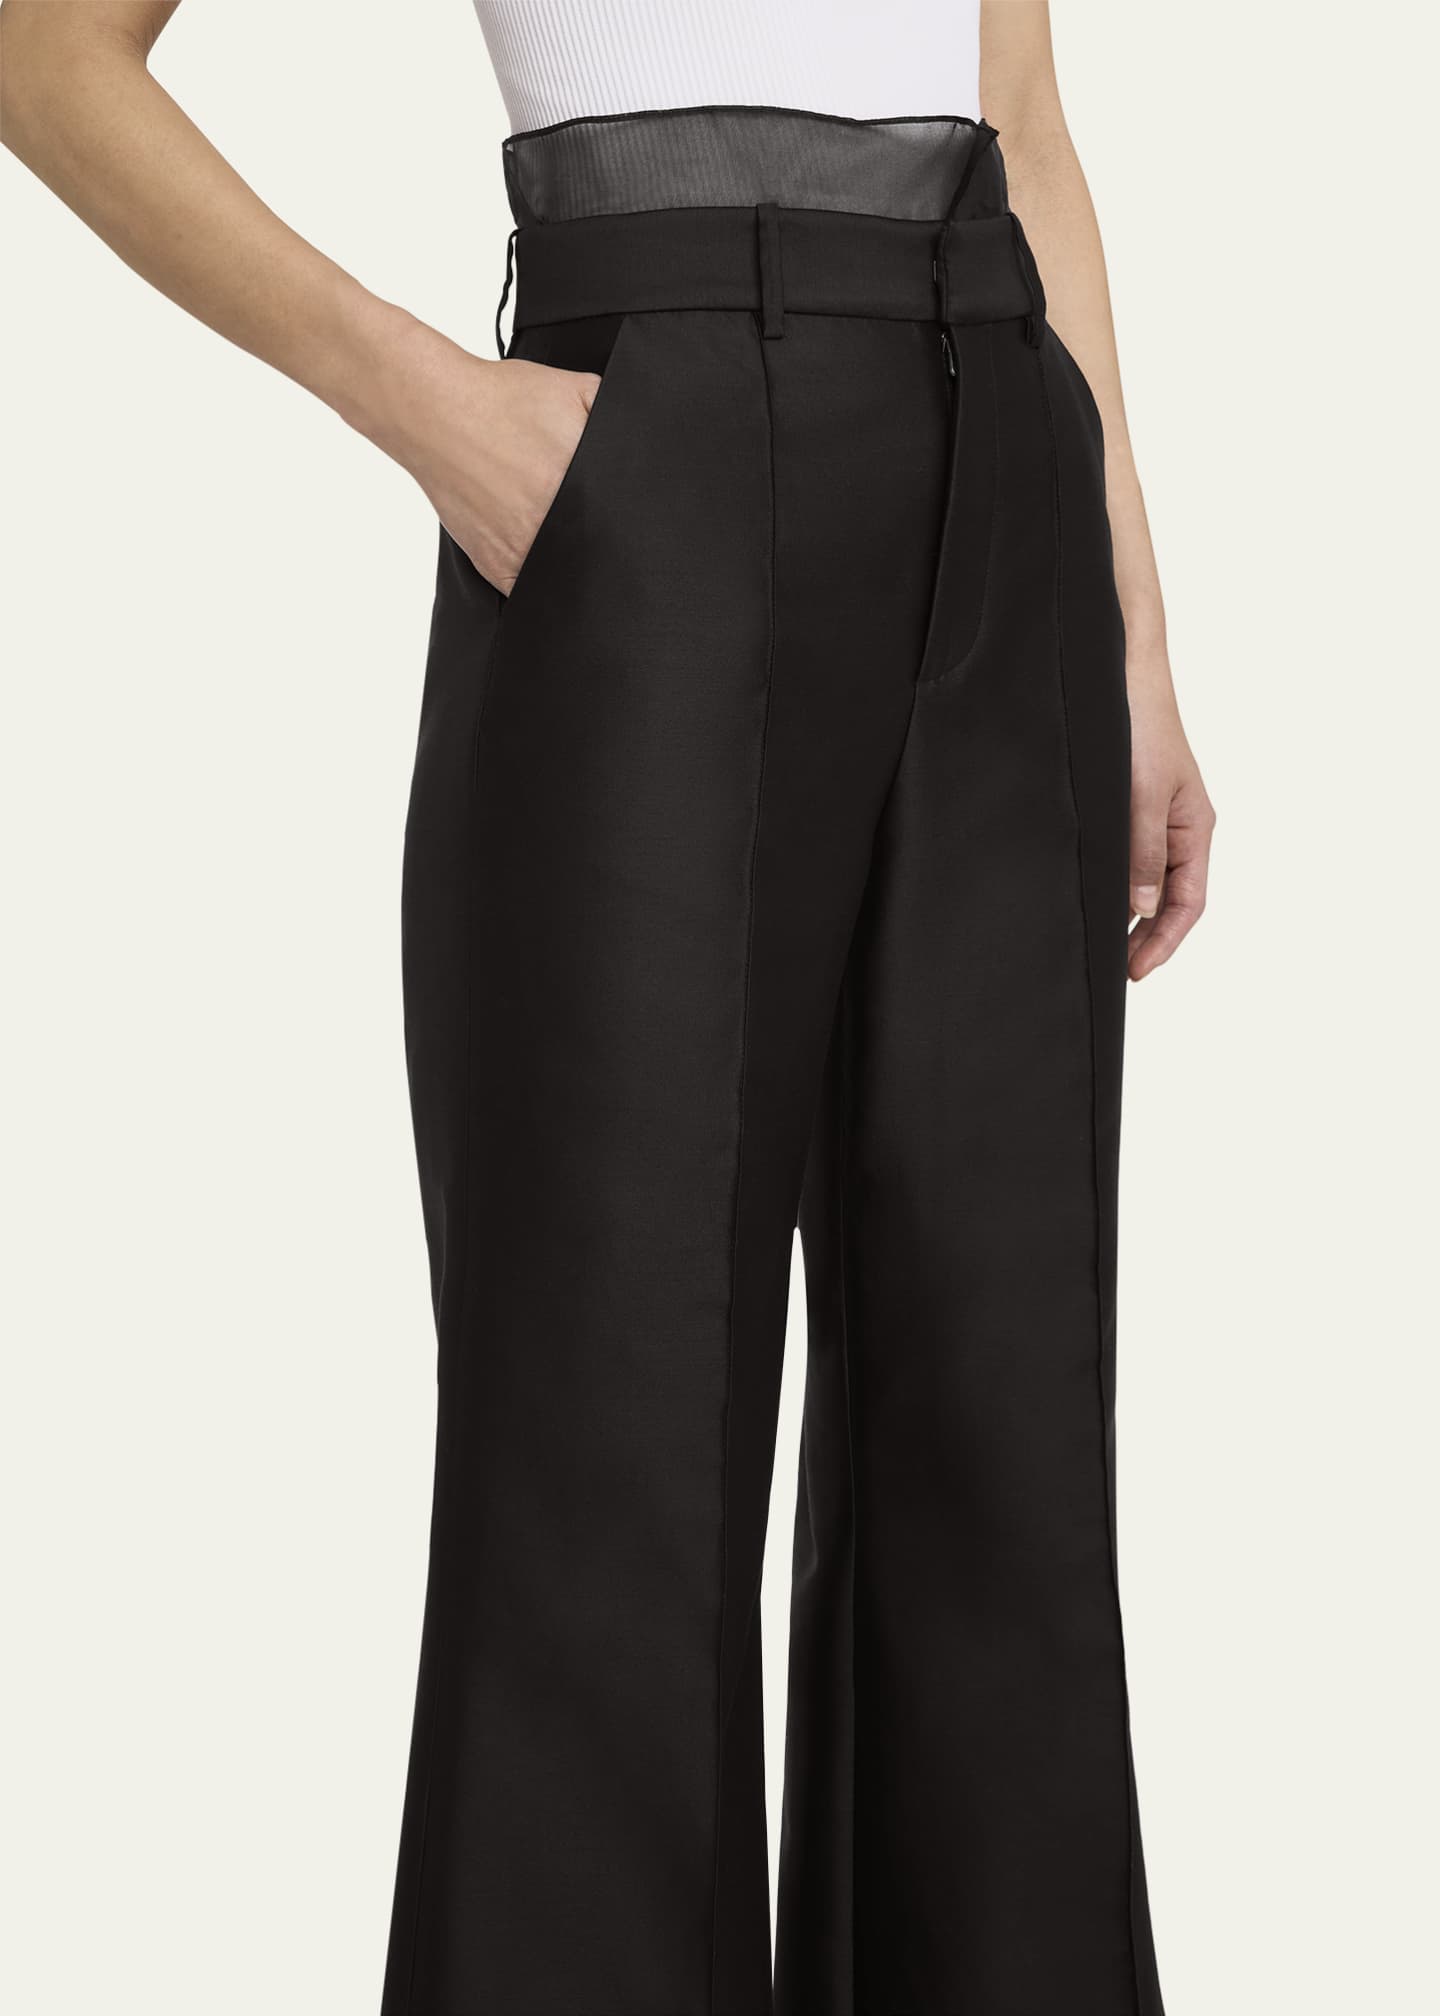 Rosie Assoulin Organza Flare Suit Pants - Bergdorf Goodman